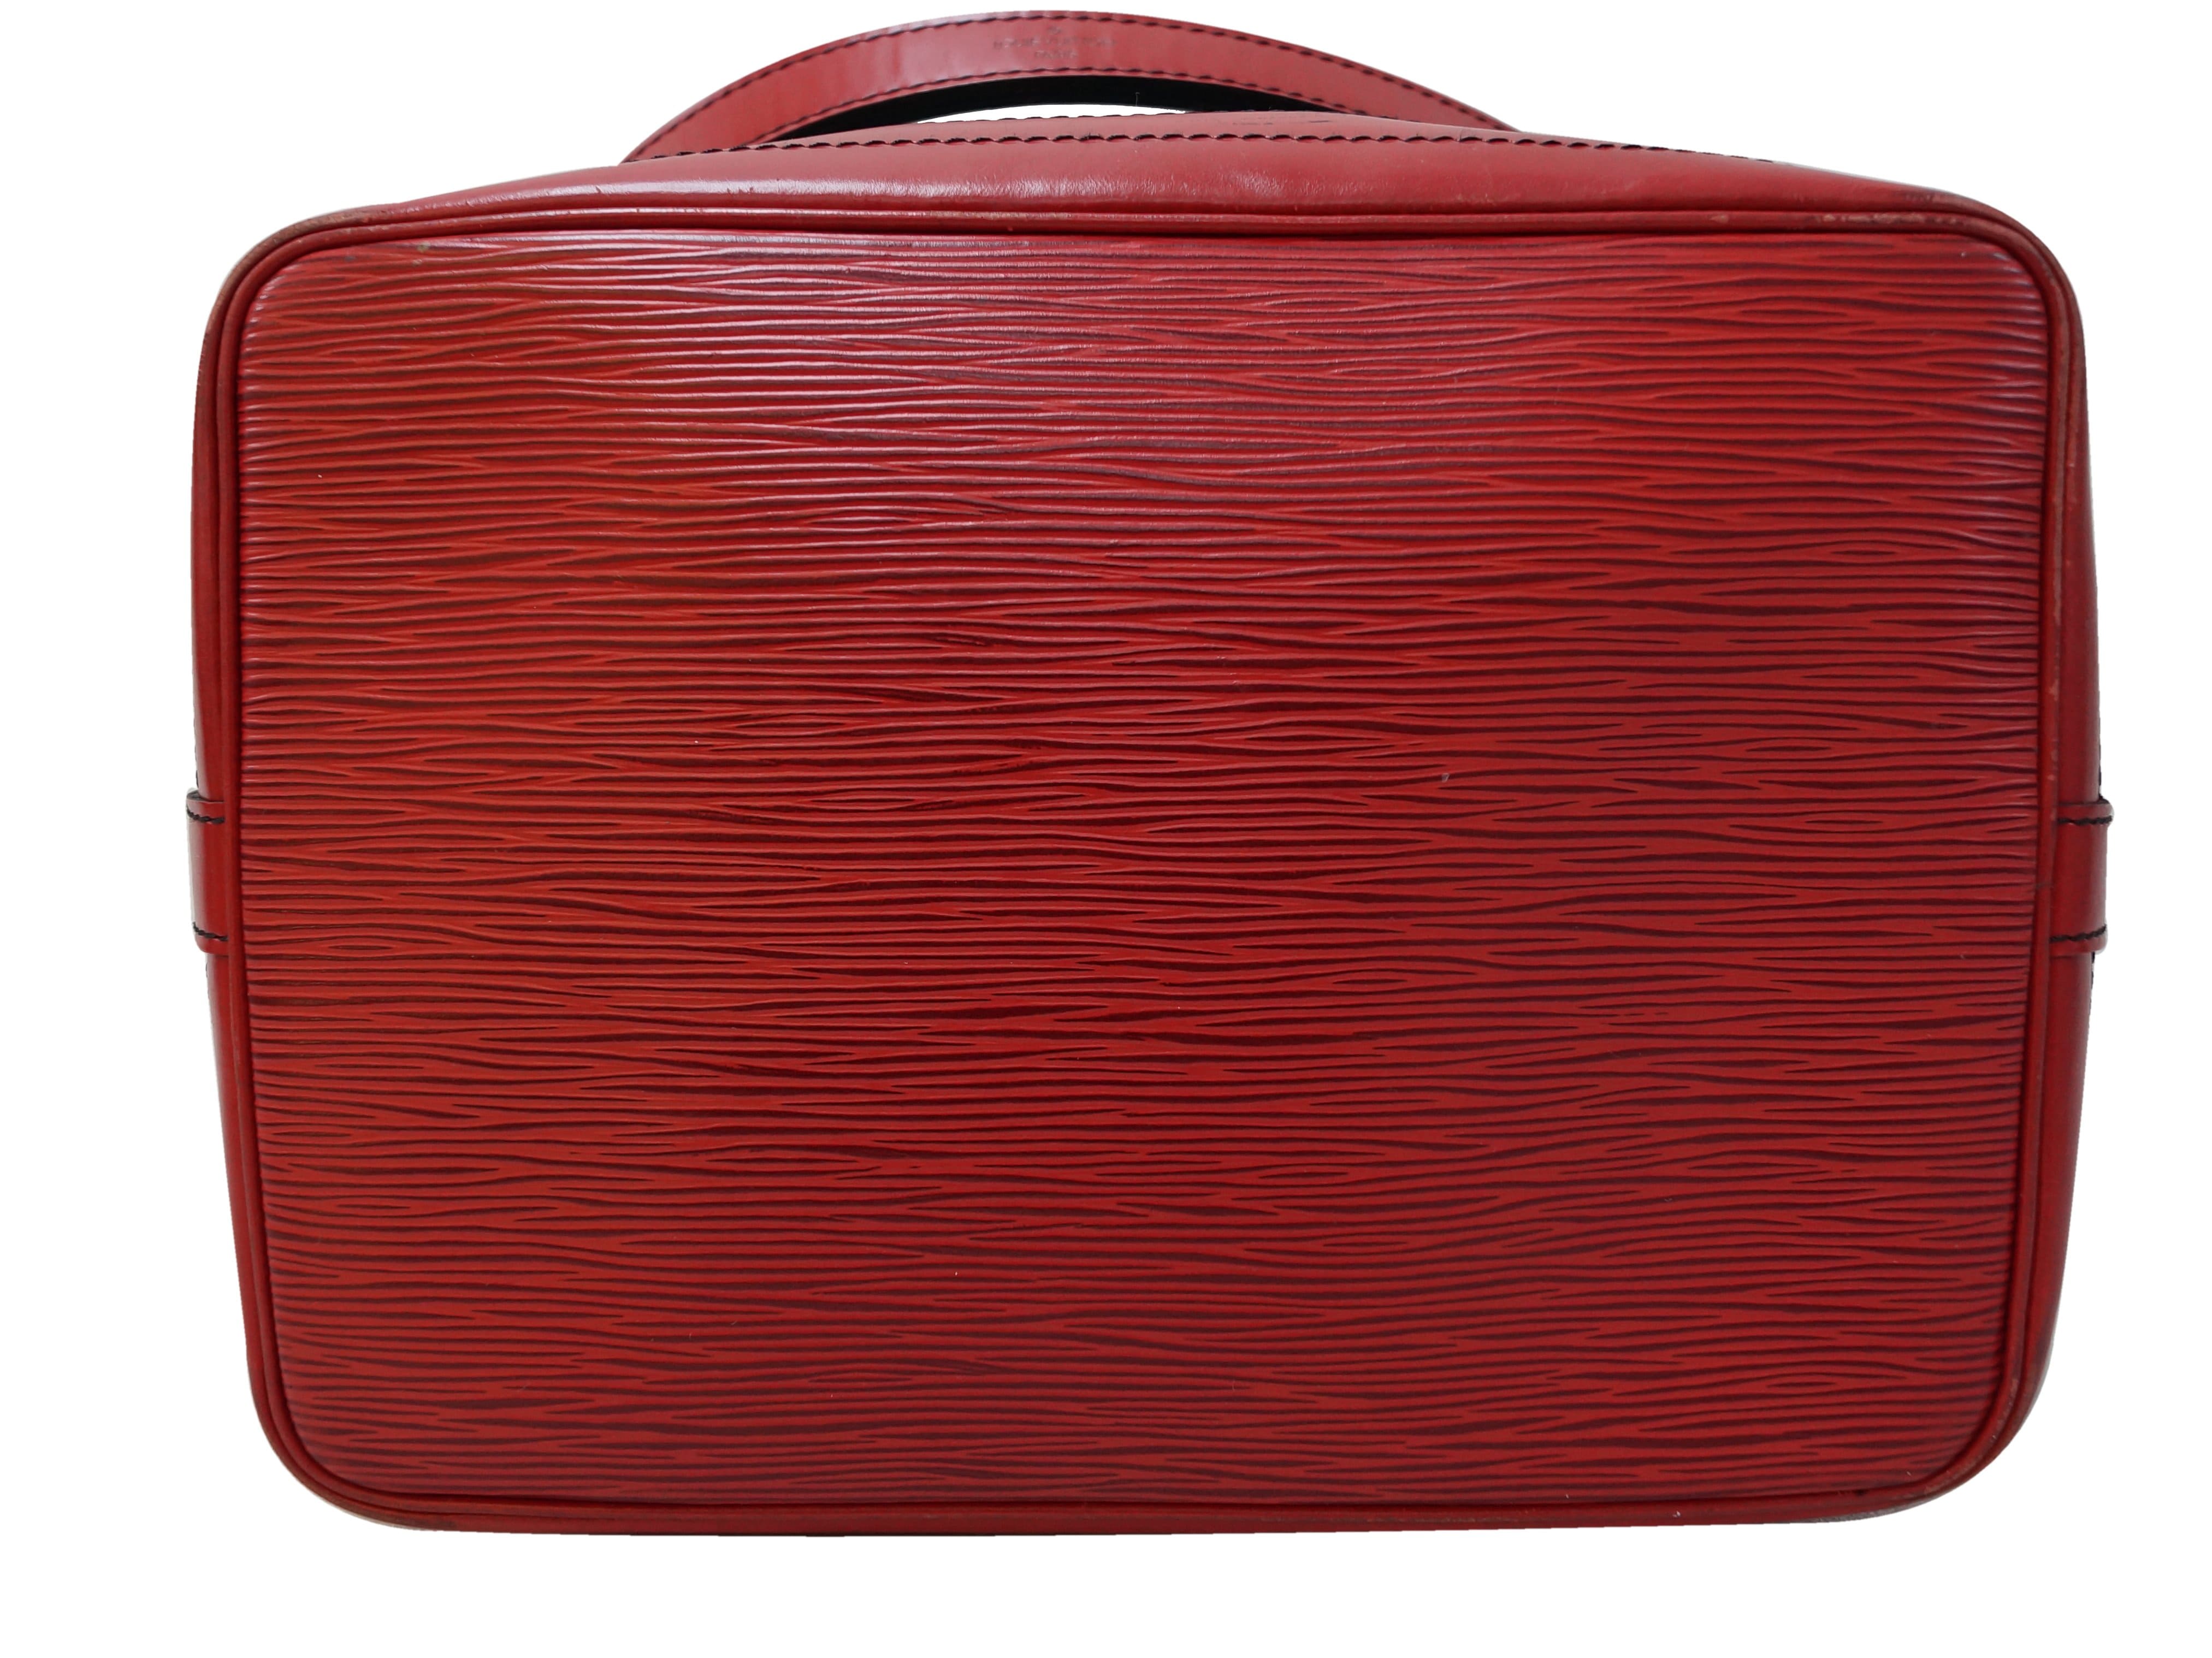 Louis+Vuitton+Petit+No%C3%A9+Black+Interior+Bucket+Bag+PM+Red+Leather for  sale online